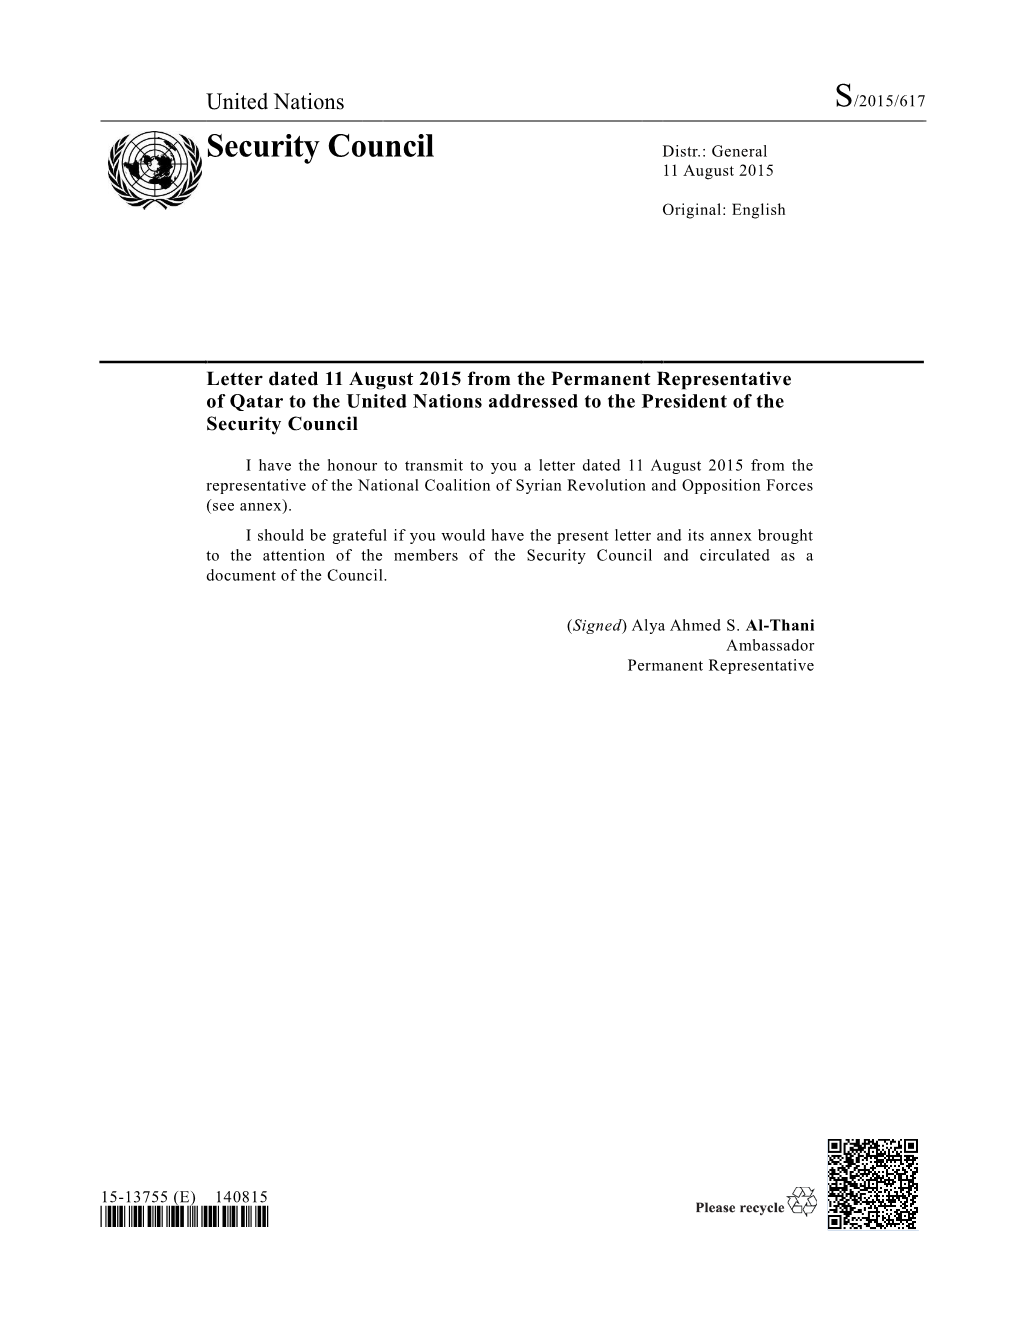 Security Council Distr.: General 11 August 2015